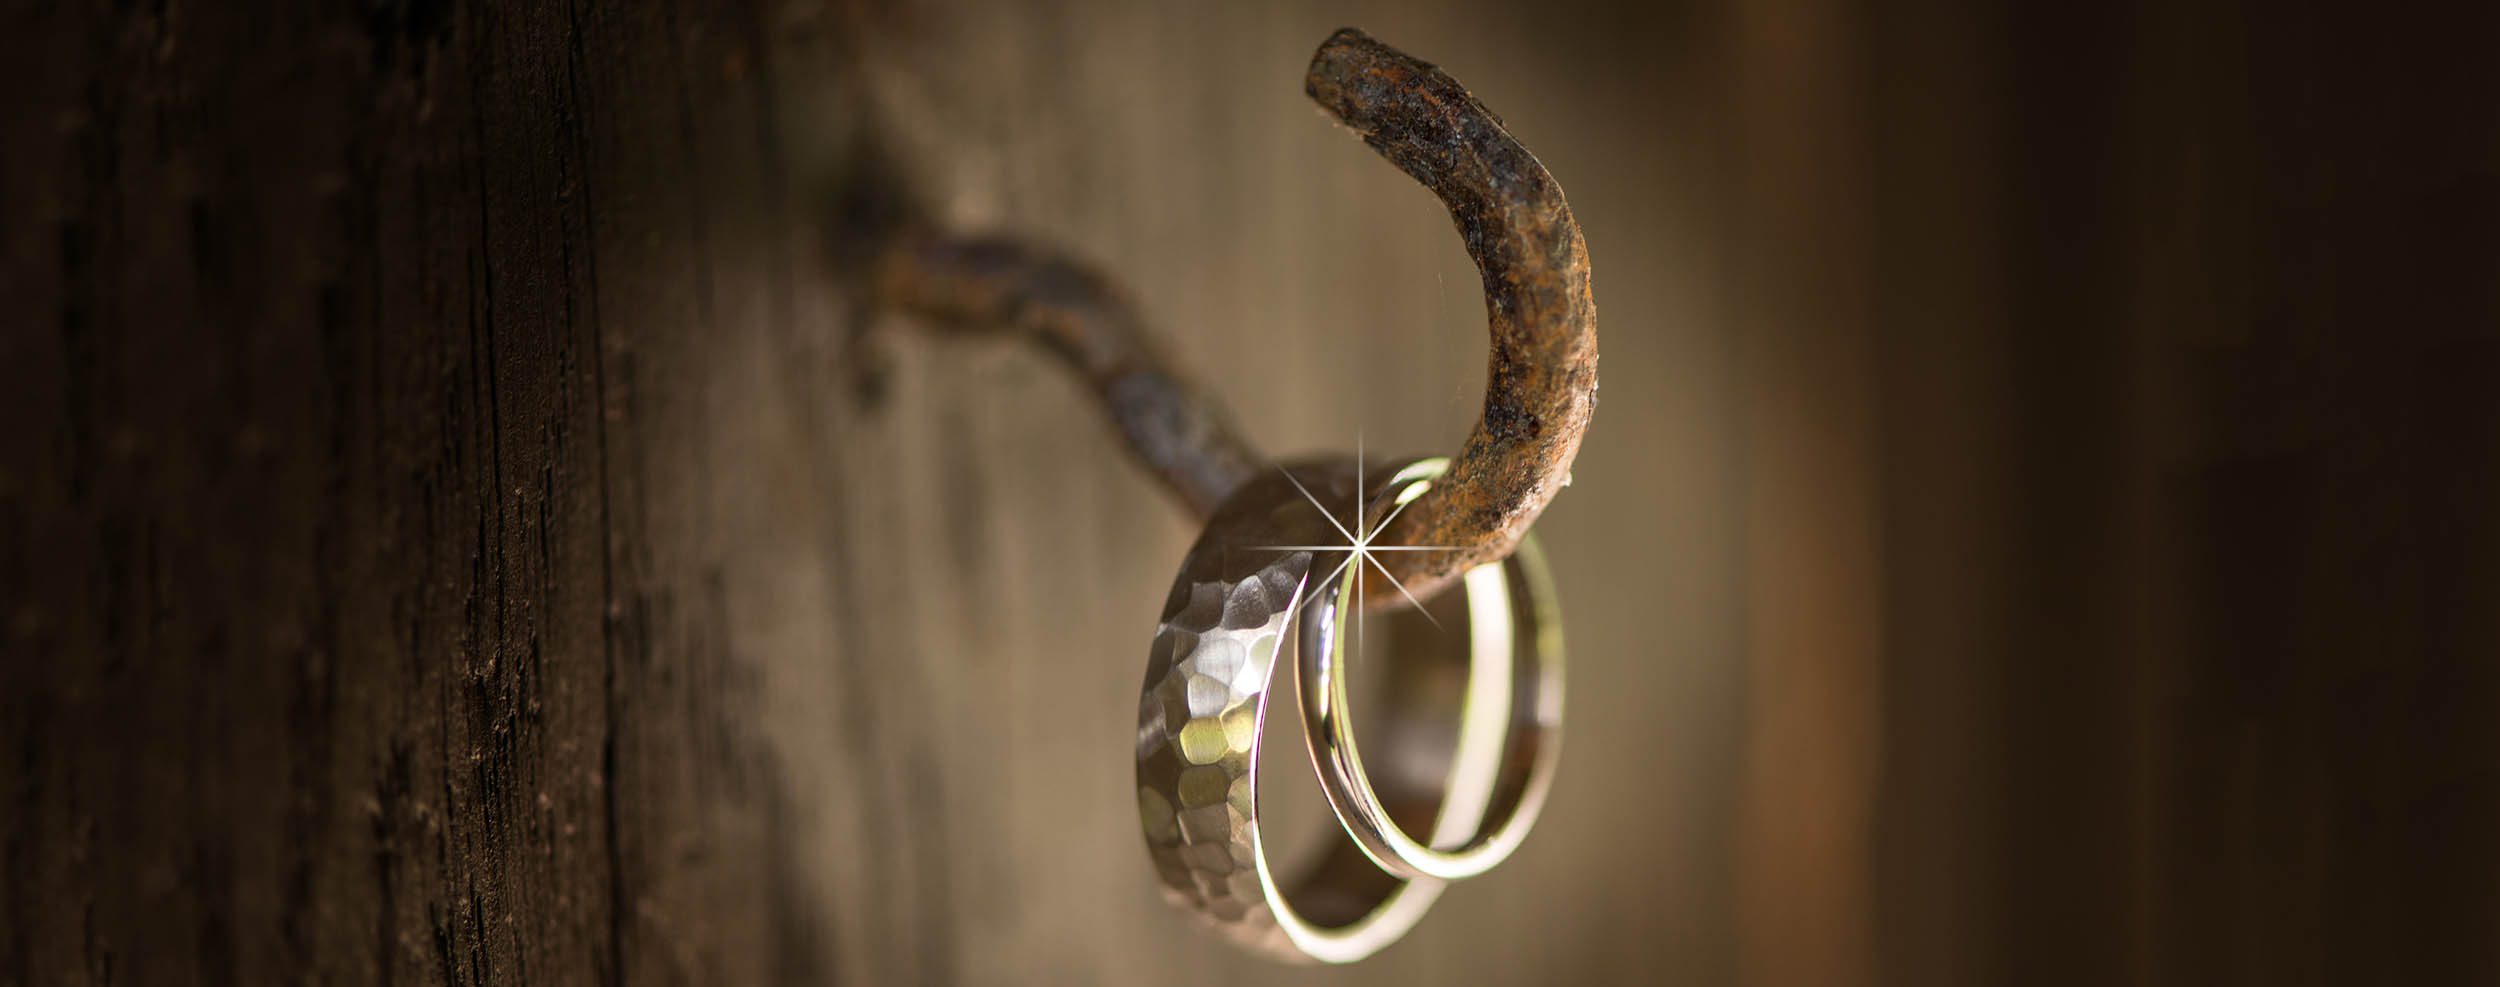 Wedding rings hanging on a hook